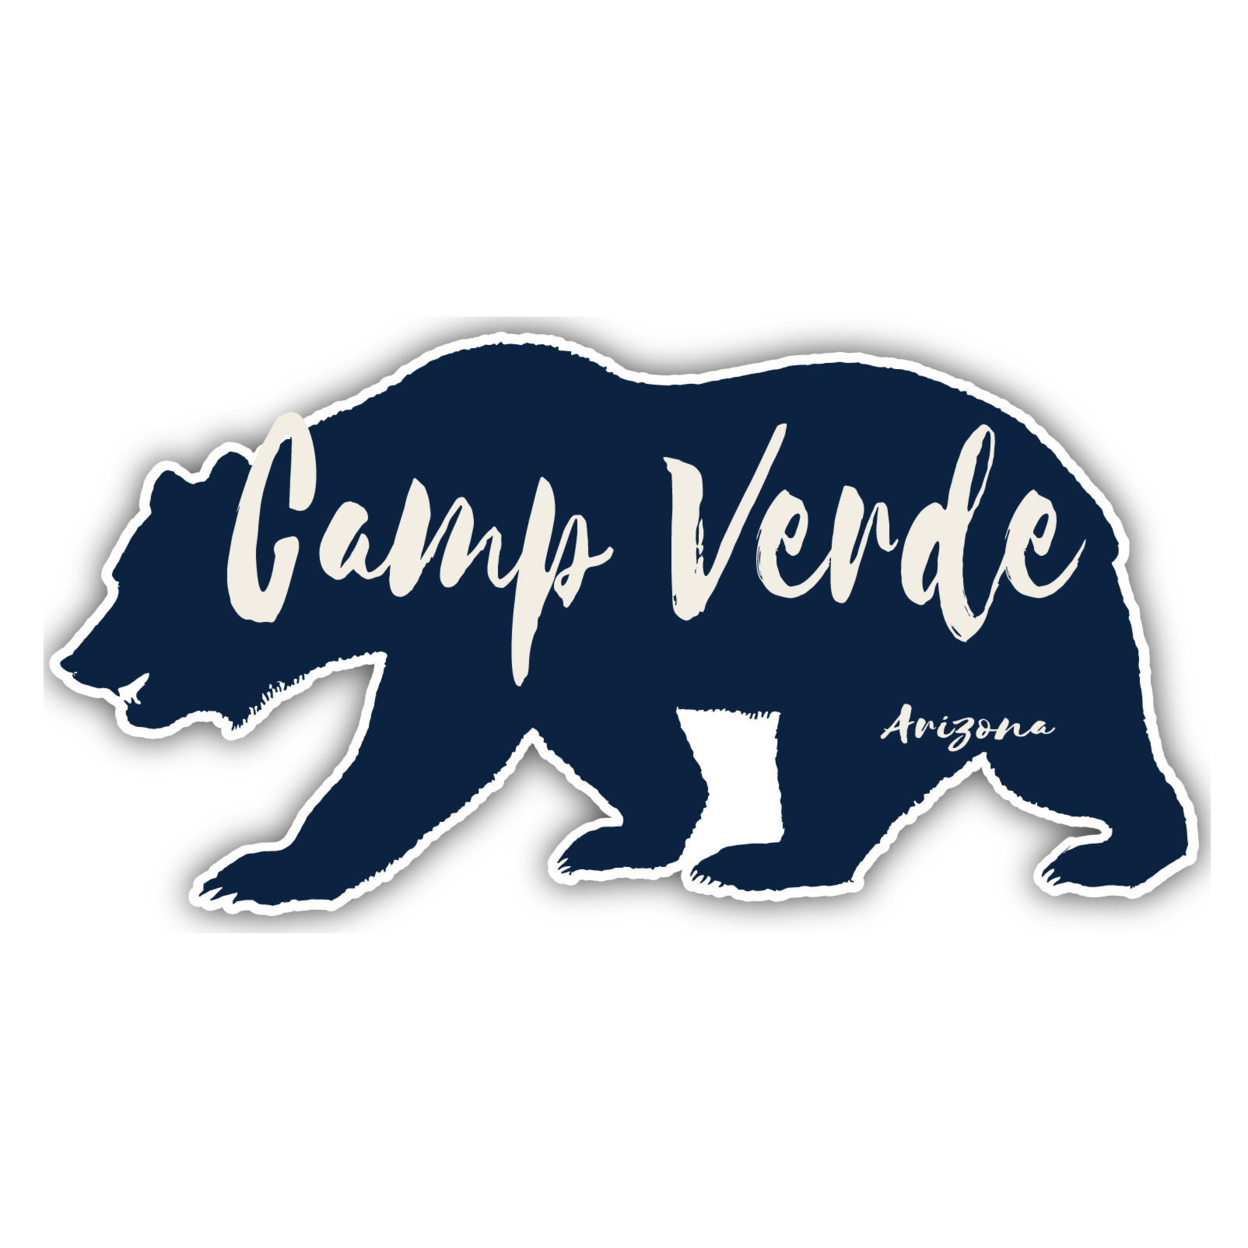 Camp Verde Arizona Souvenir Decorative Stickers (Choose Theme And Size) - Single Unit, 4-Inch, Tent